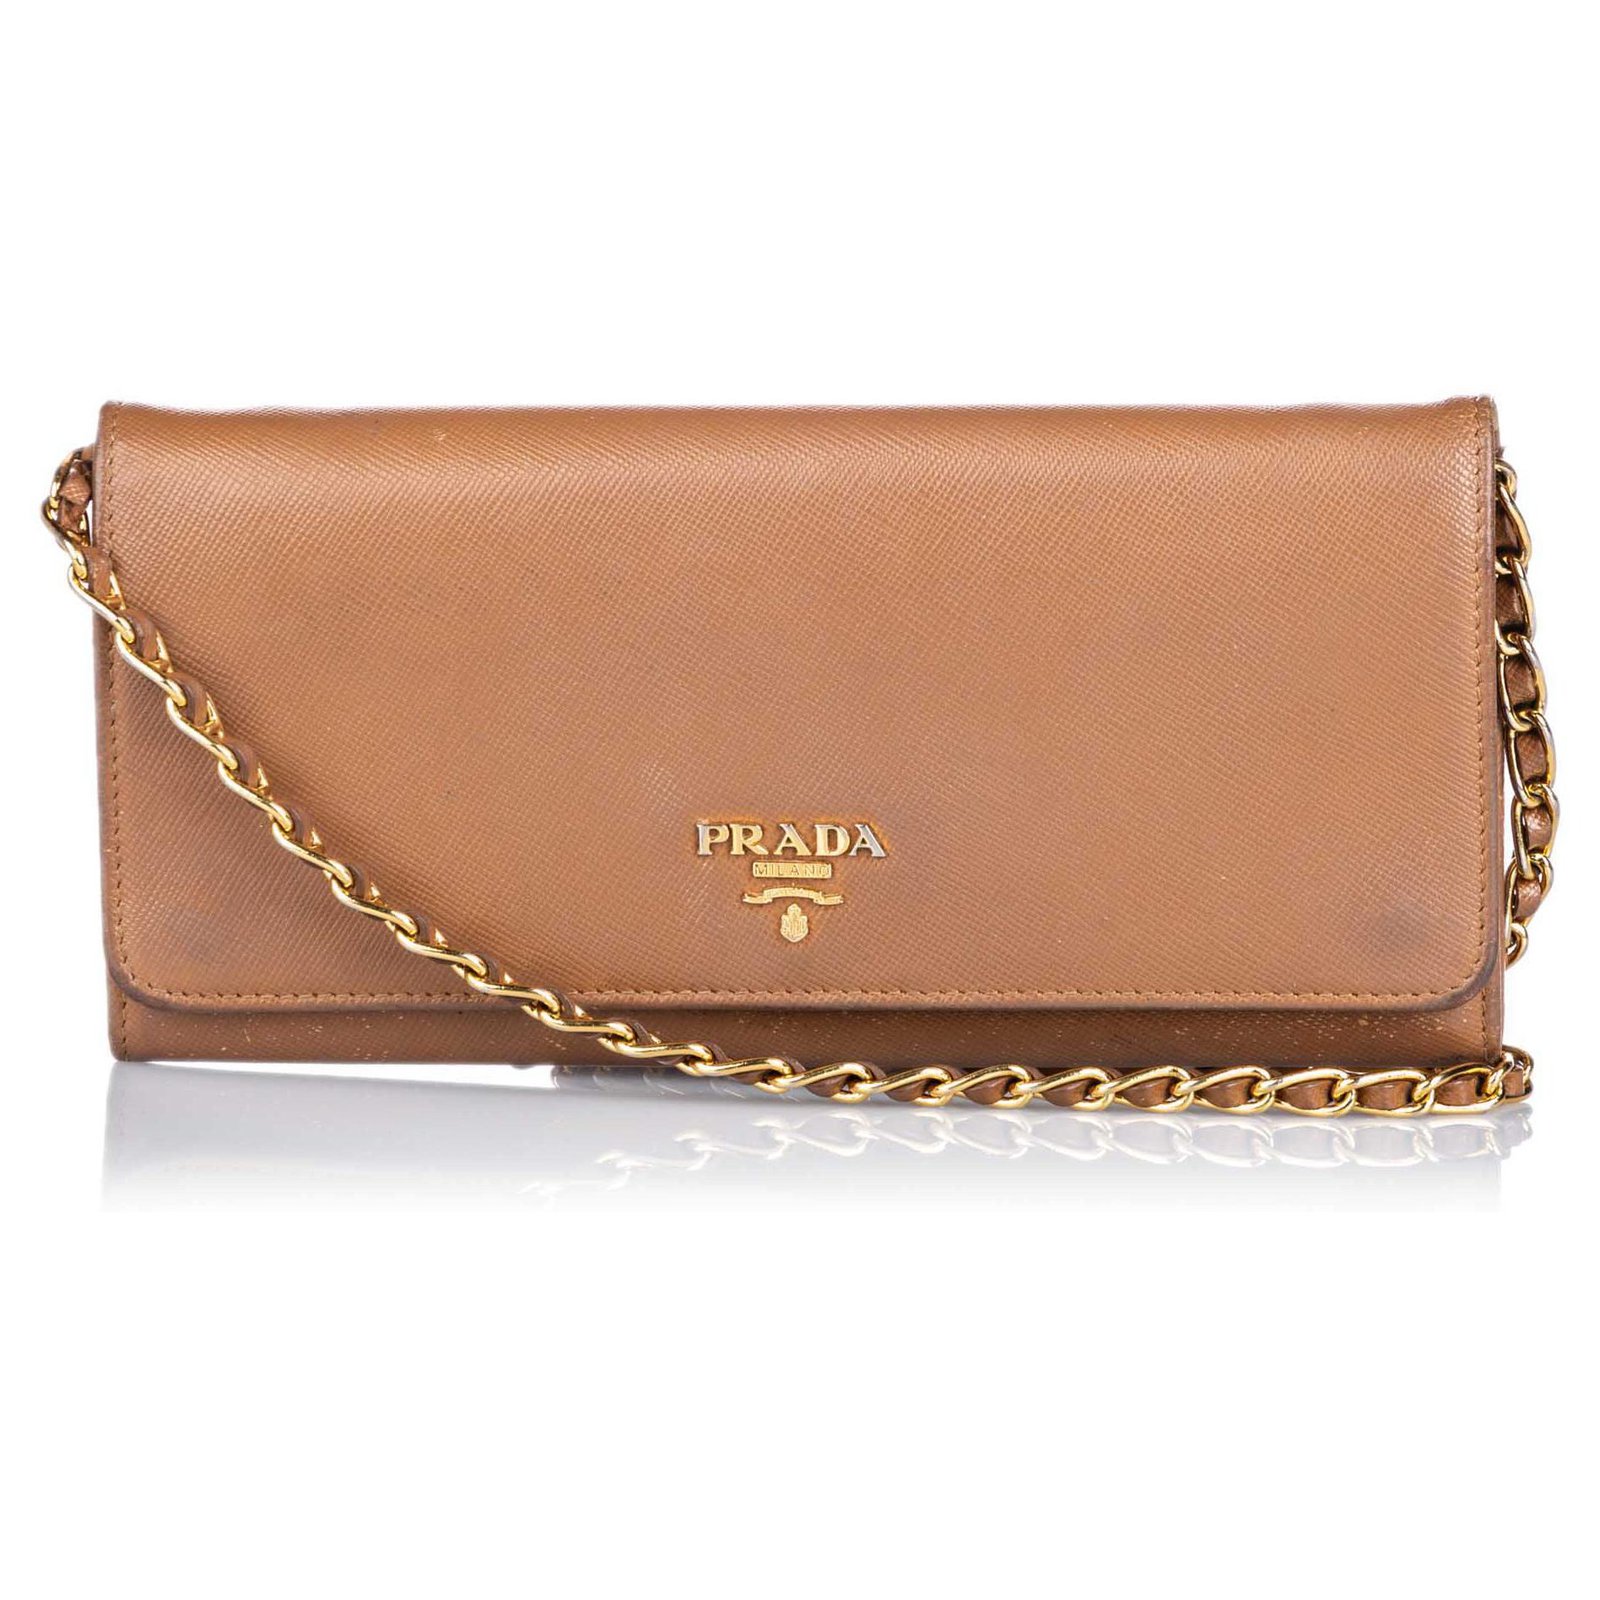 prada wallet on chain brown